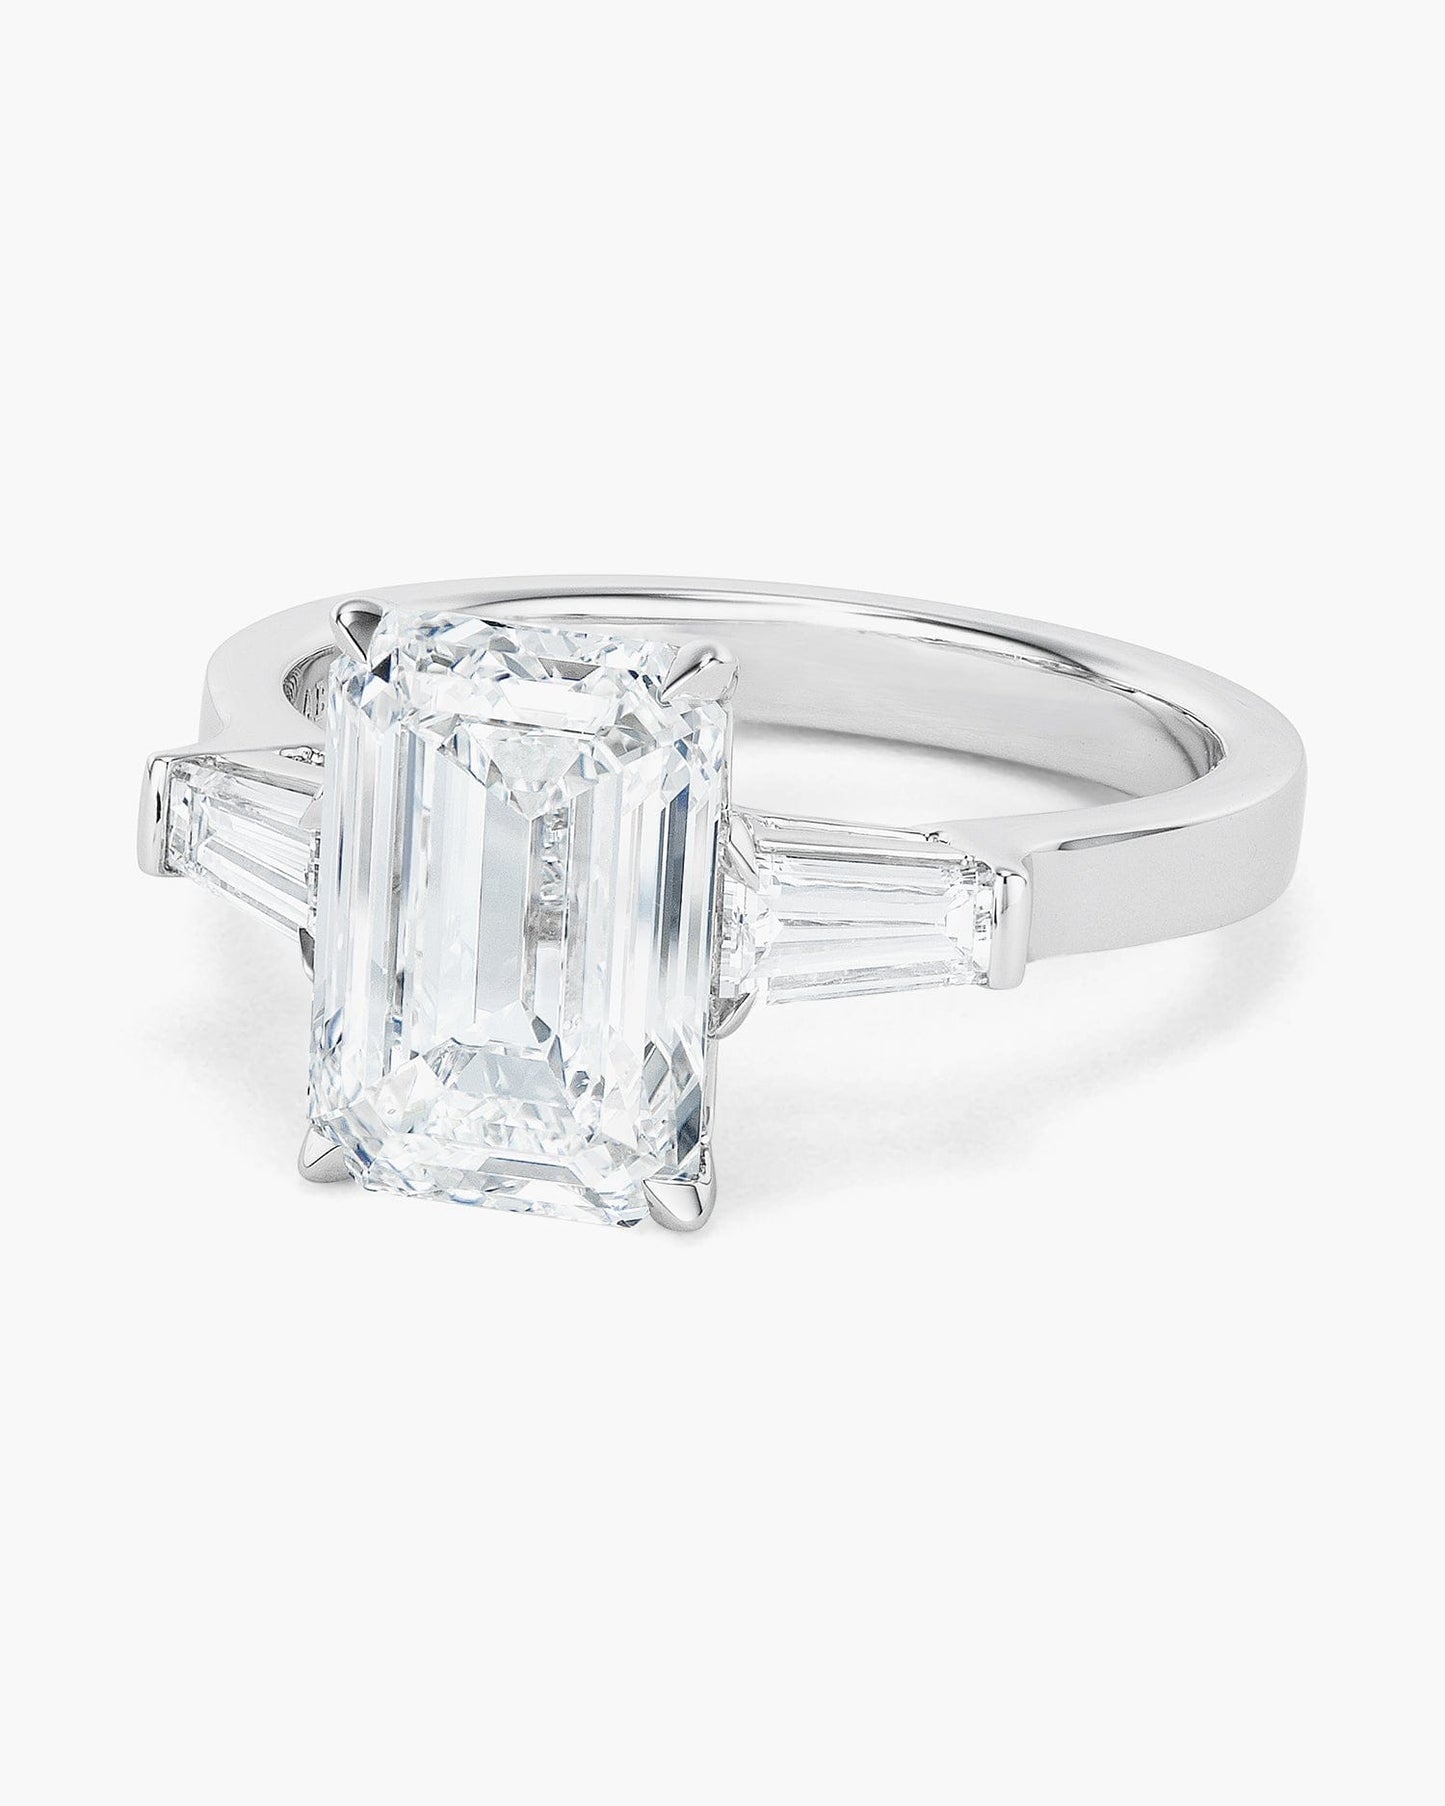 3.19 carat Emerald Cut Diamond Ring